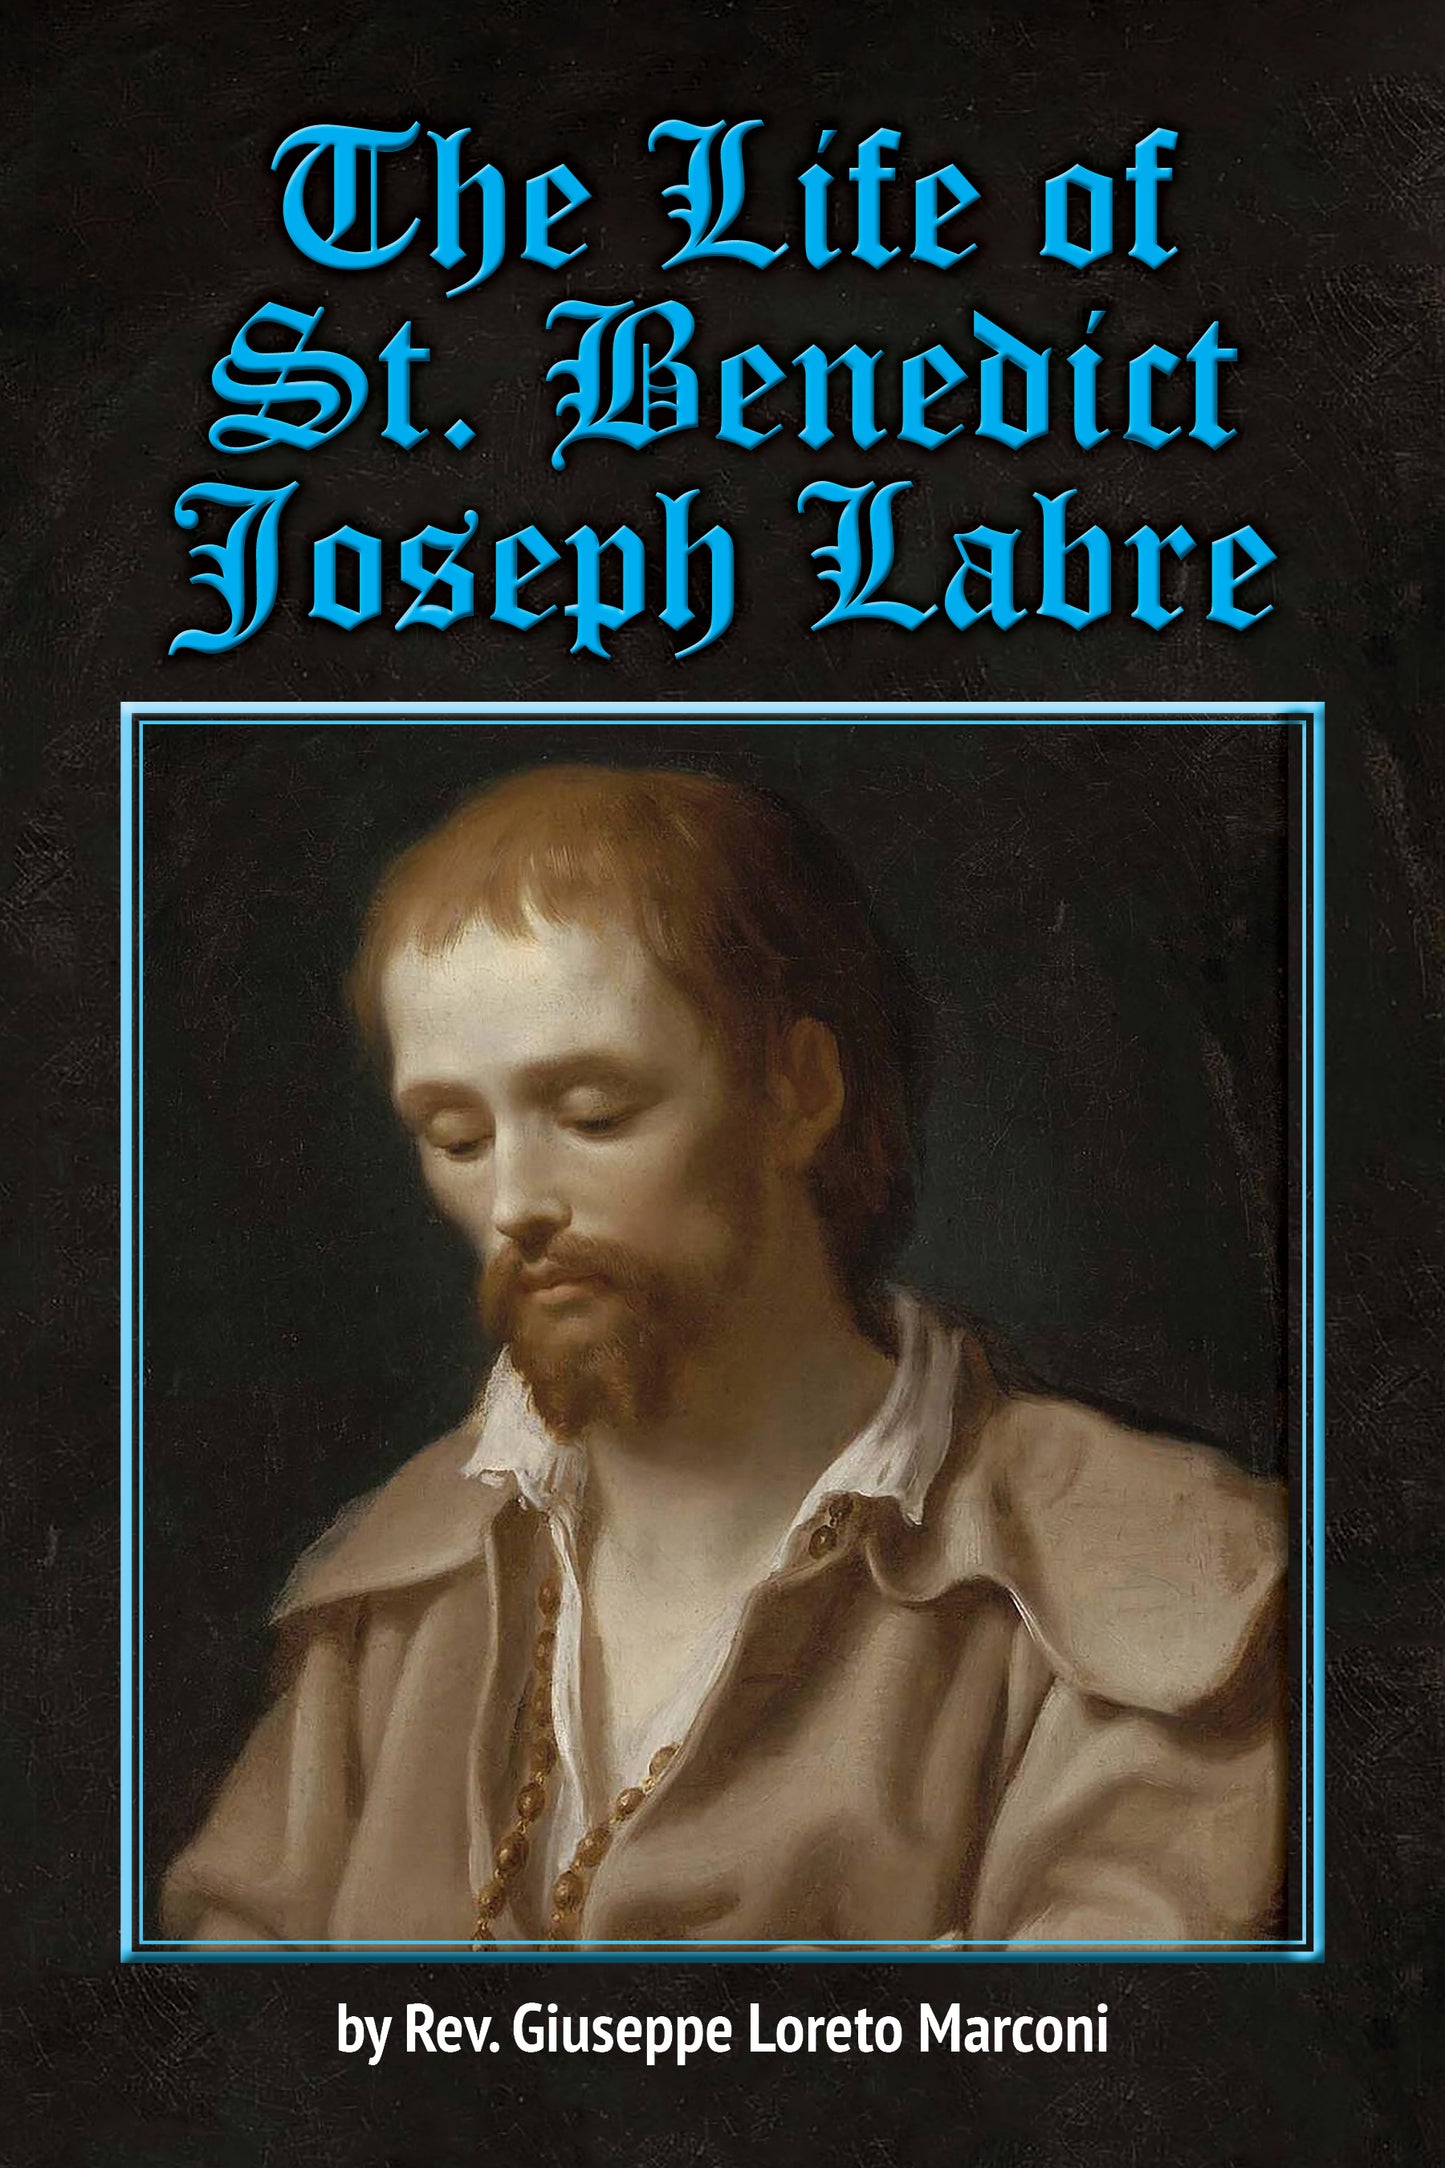 The Life of St. Benedict Joseph Labre ~ Rev. Giuseppe Loreto Marconi